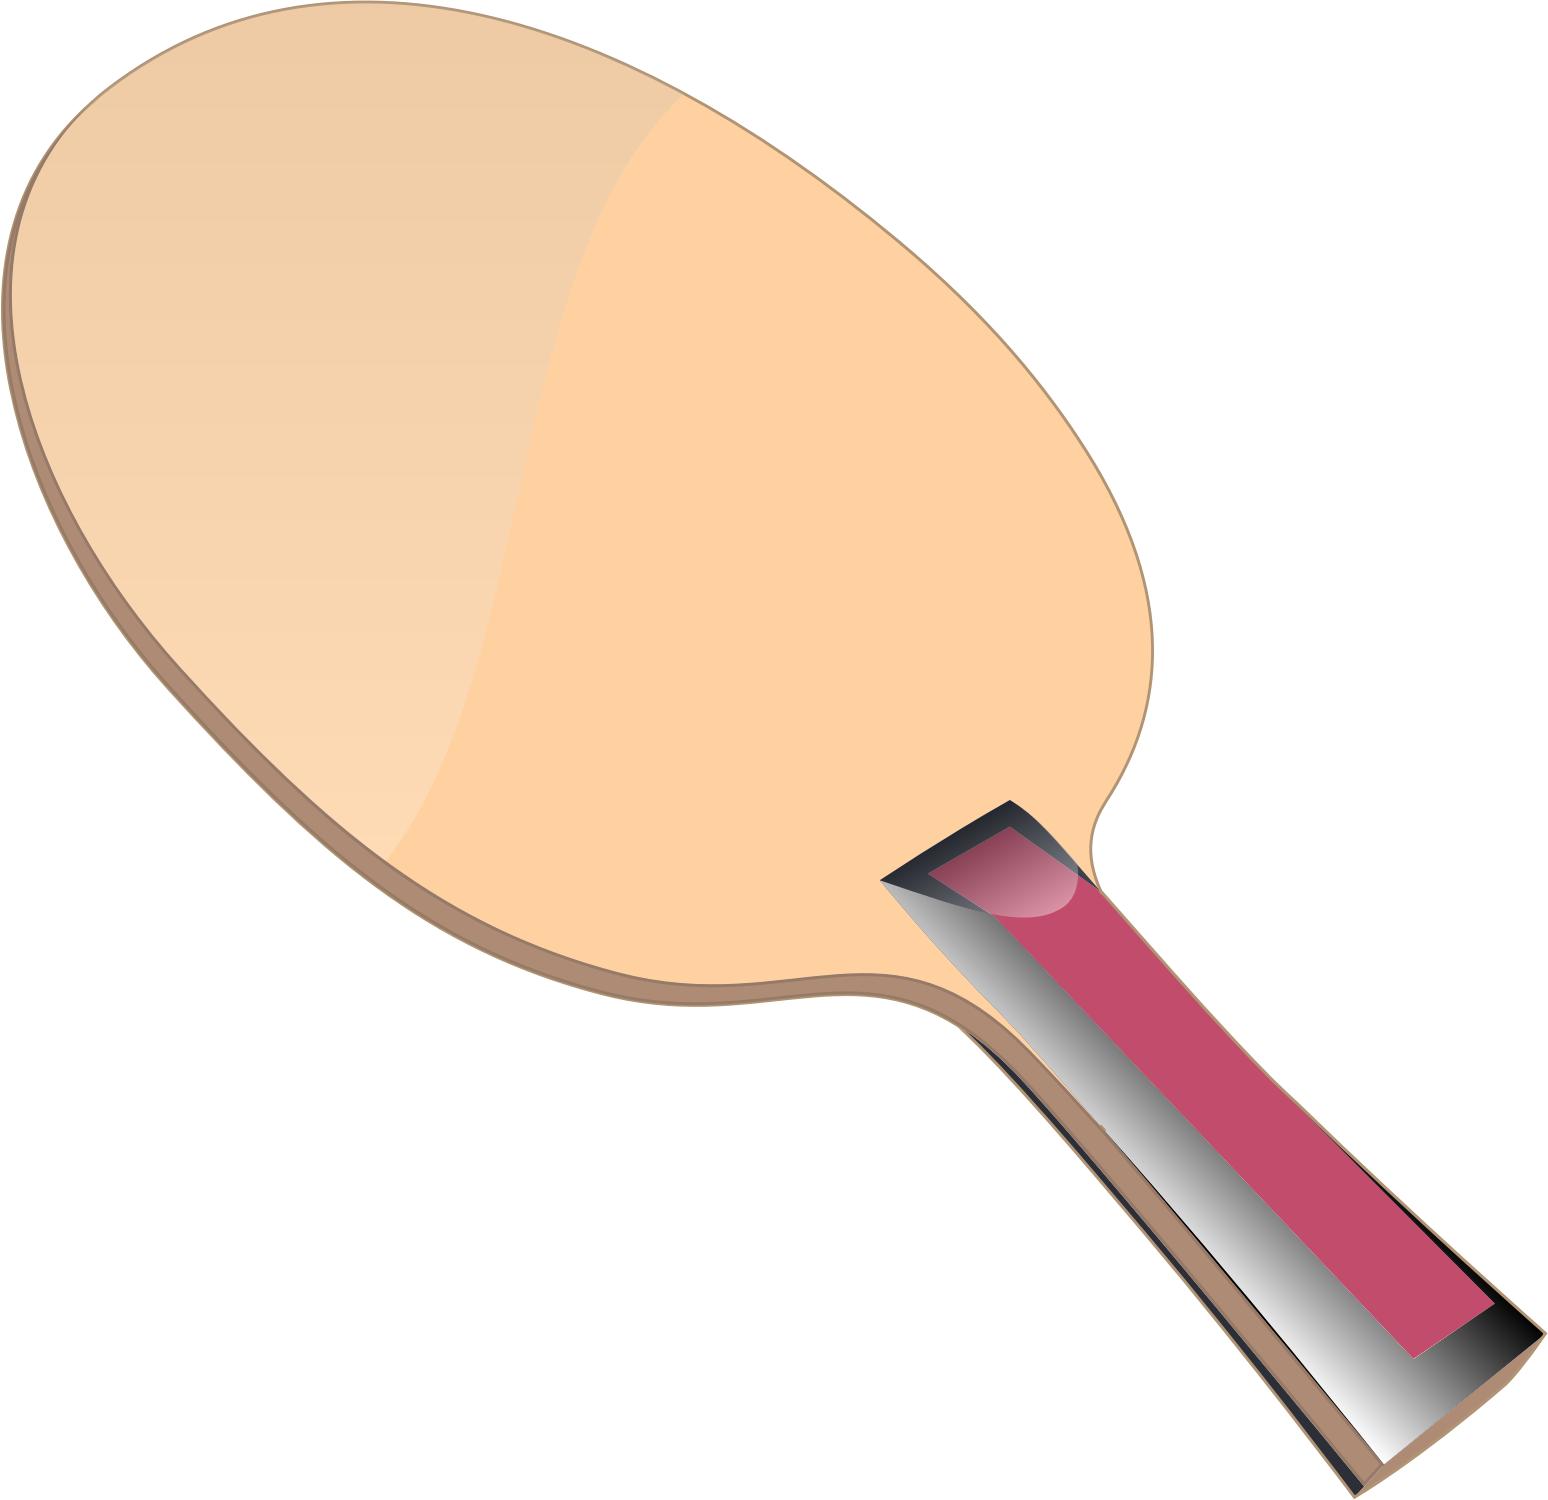 Ping Pong bat icons